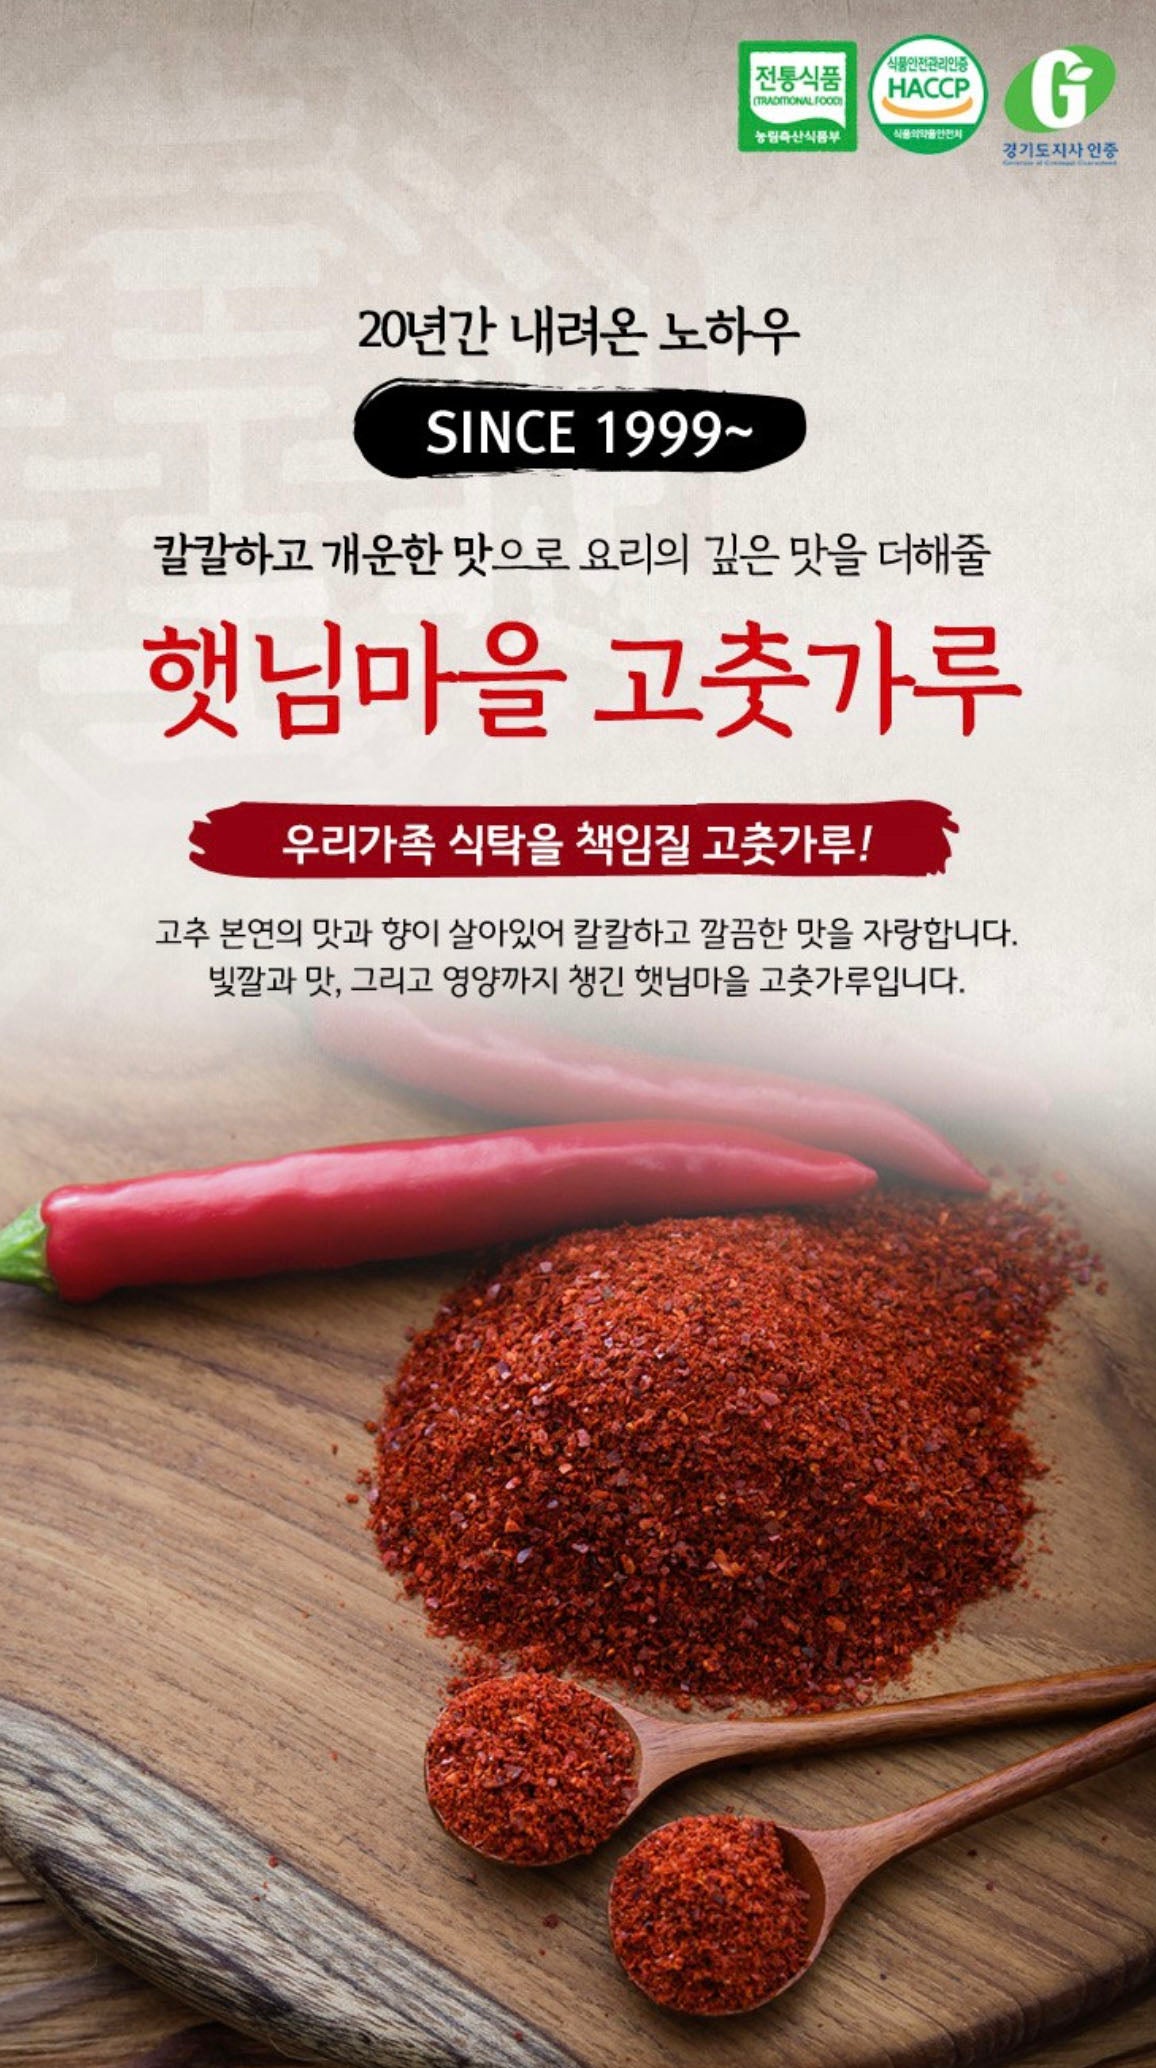 Gochugaru Korean Chili Flake - Spiceology Chefs